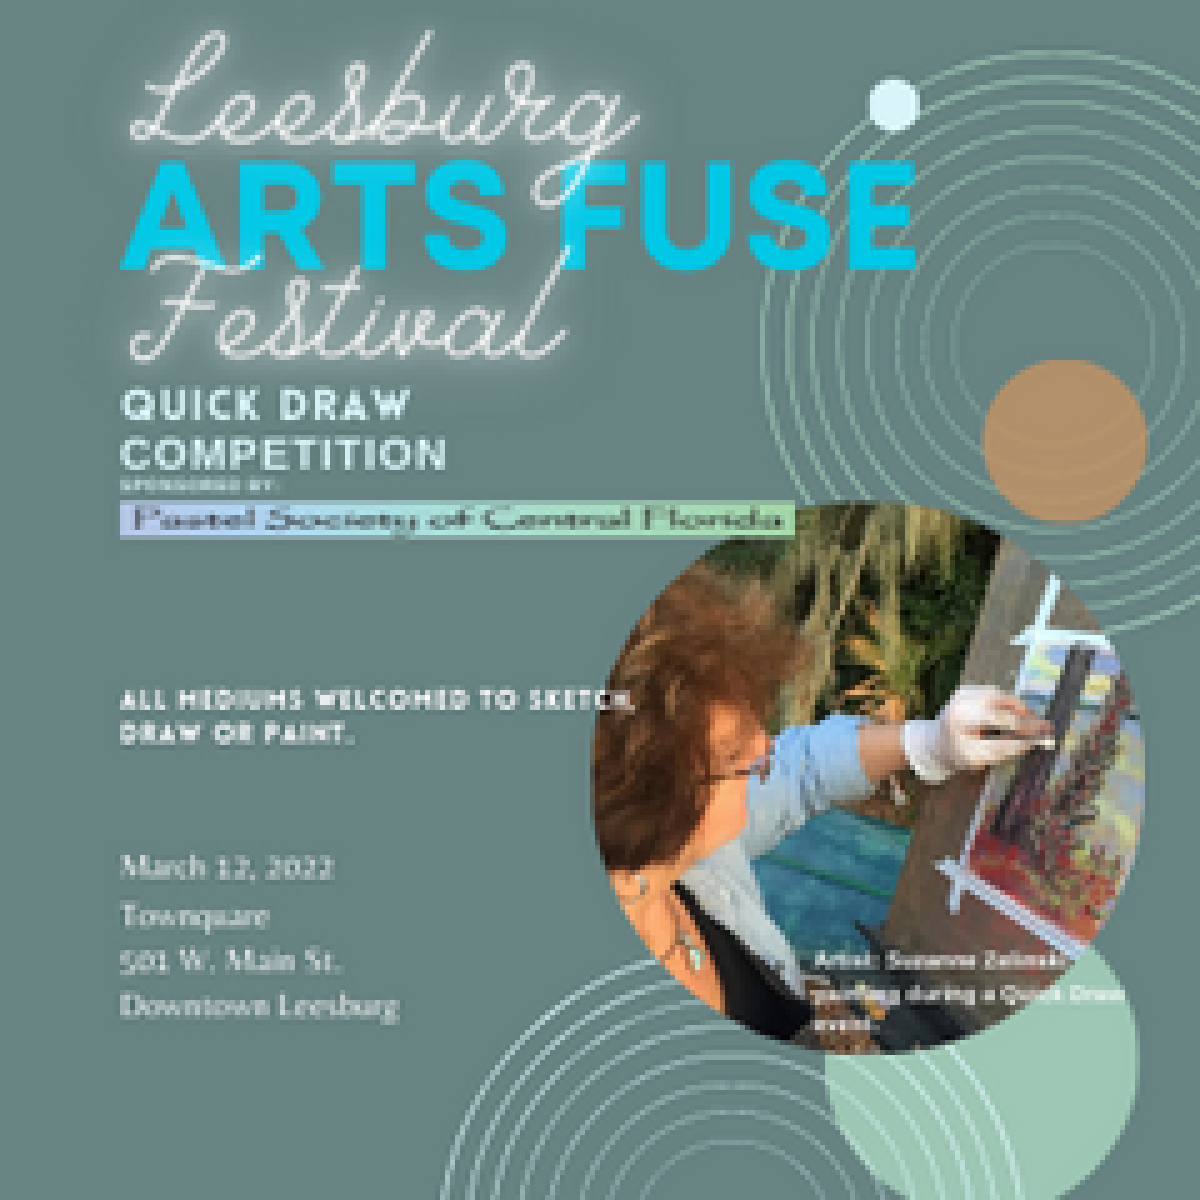 Leesburg Arts Fuse Festival Quick Draw